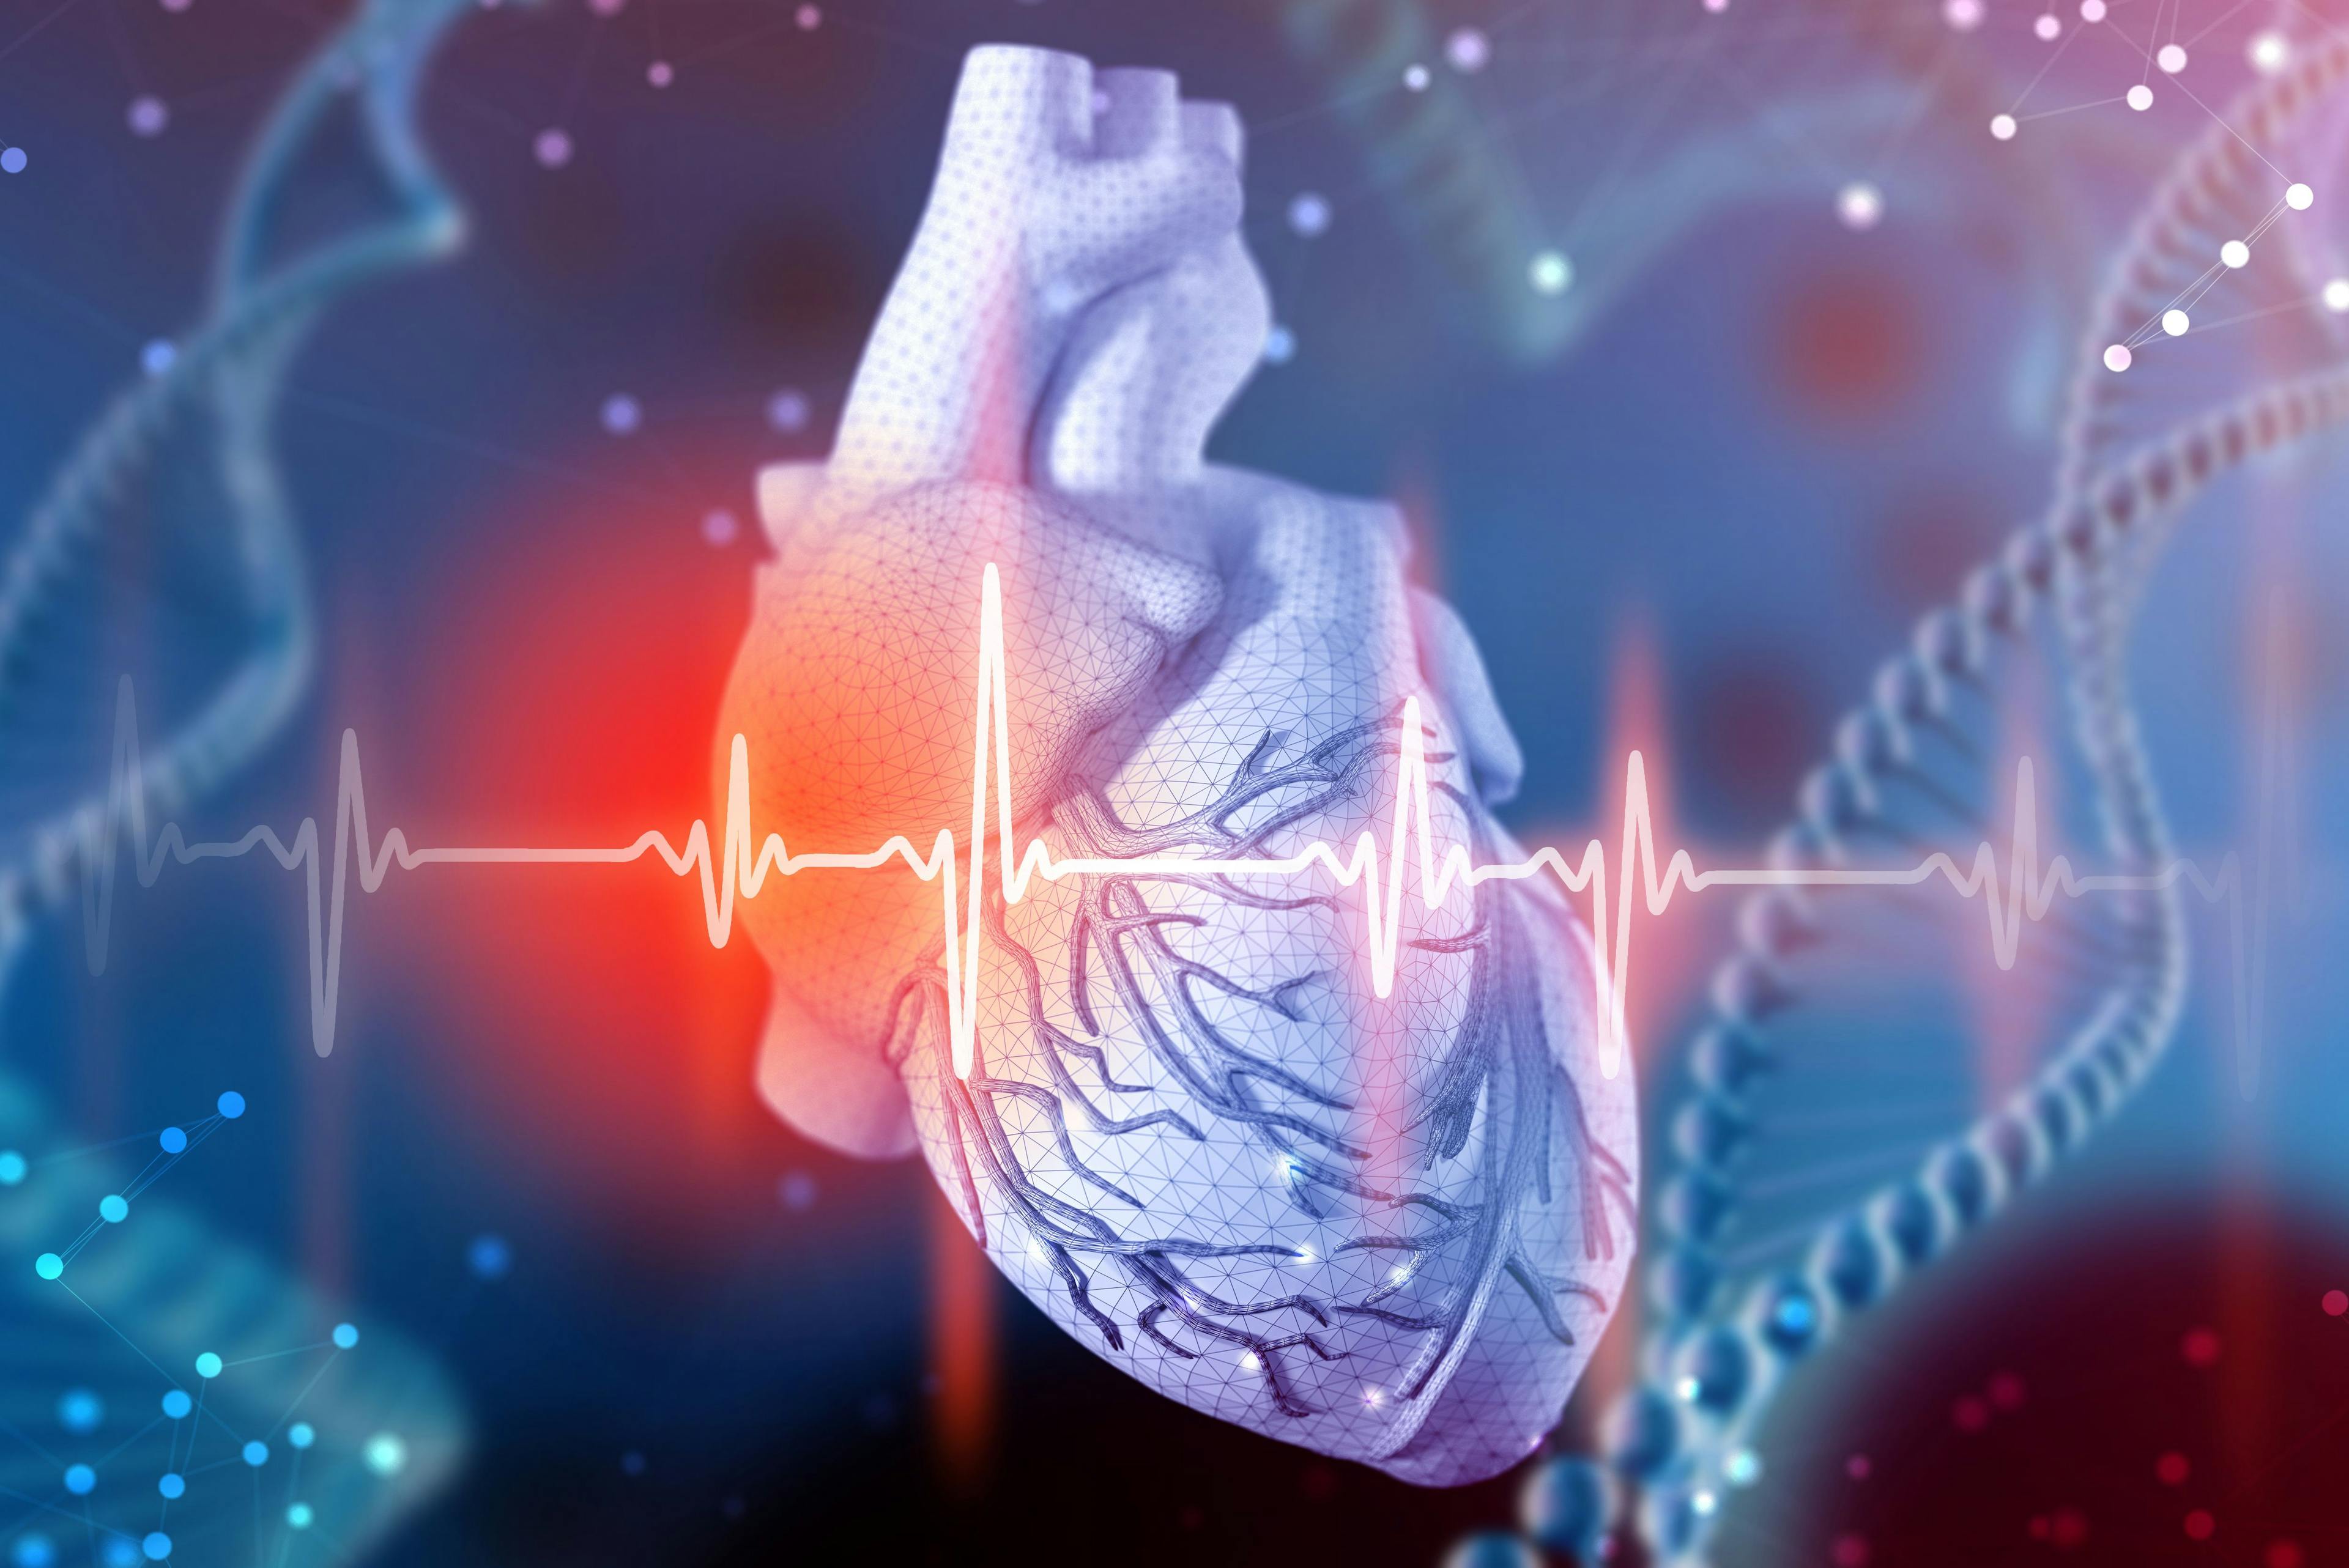 3d illustration of human heart and cardiogram on futuristic blue background. Digital technologies in medicine | Image Credit: Artem - stock.adobe.com